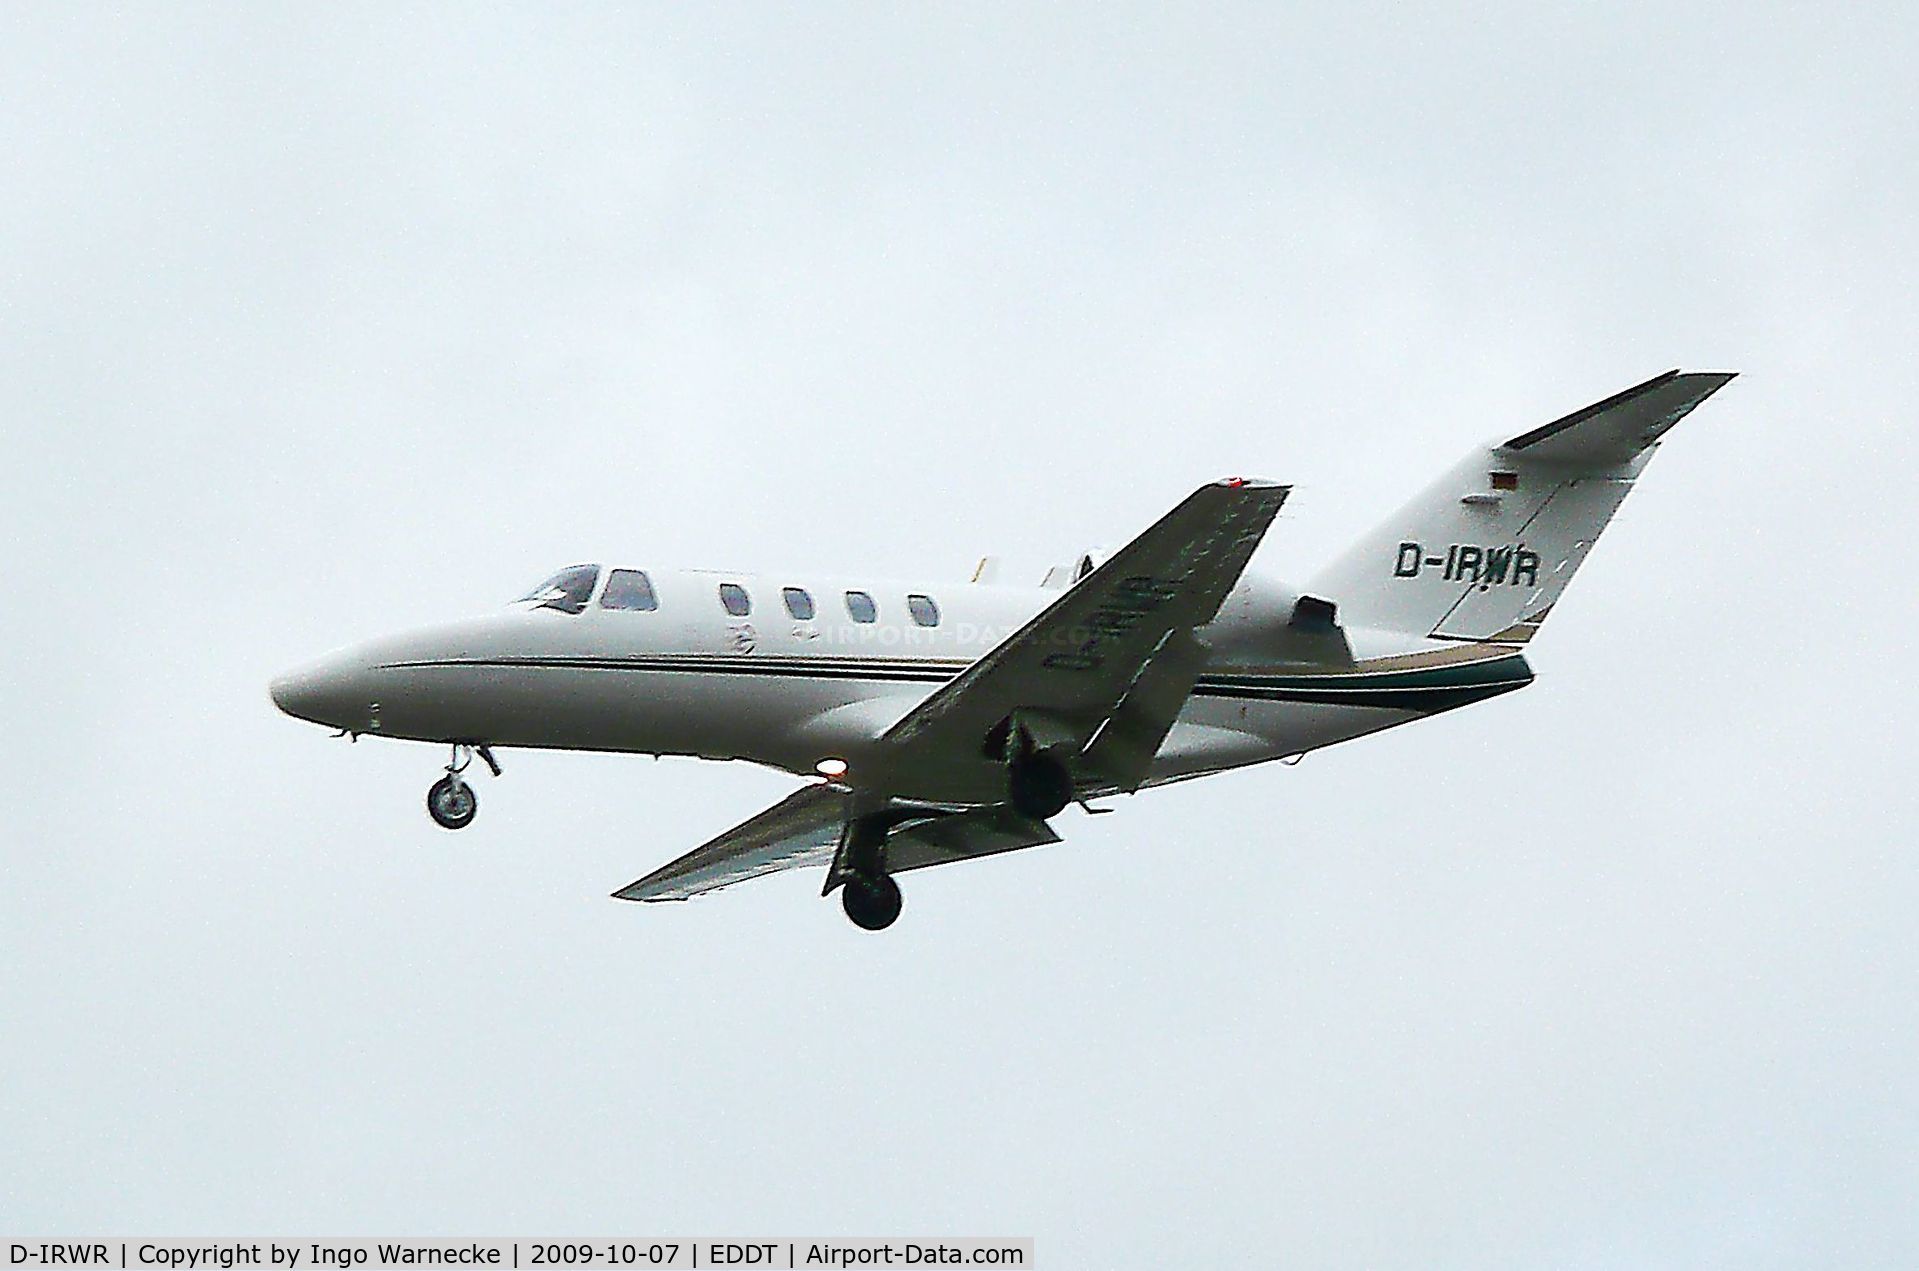 D-IRWR, 1996 Cessna 525 CitationJet CJ1 C/N 525-0118, Cessna 525 CitationJet CJ1 on final approach into Tegel airport